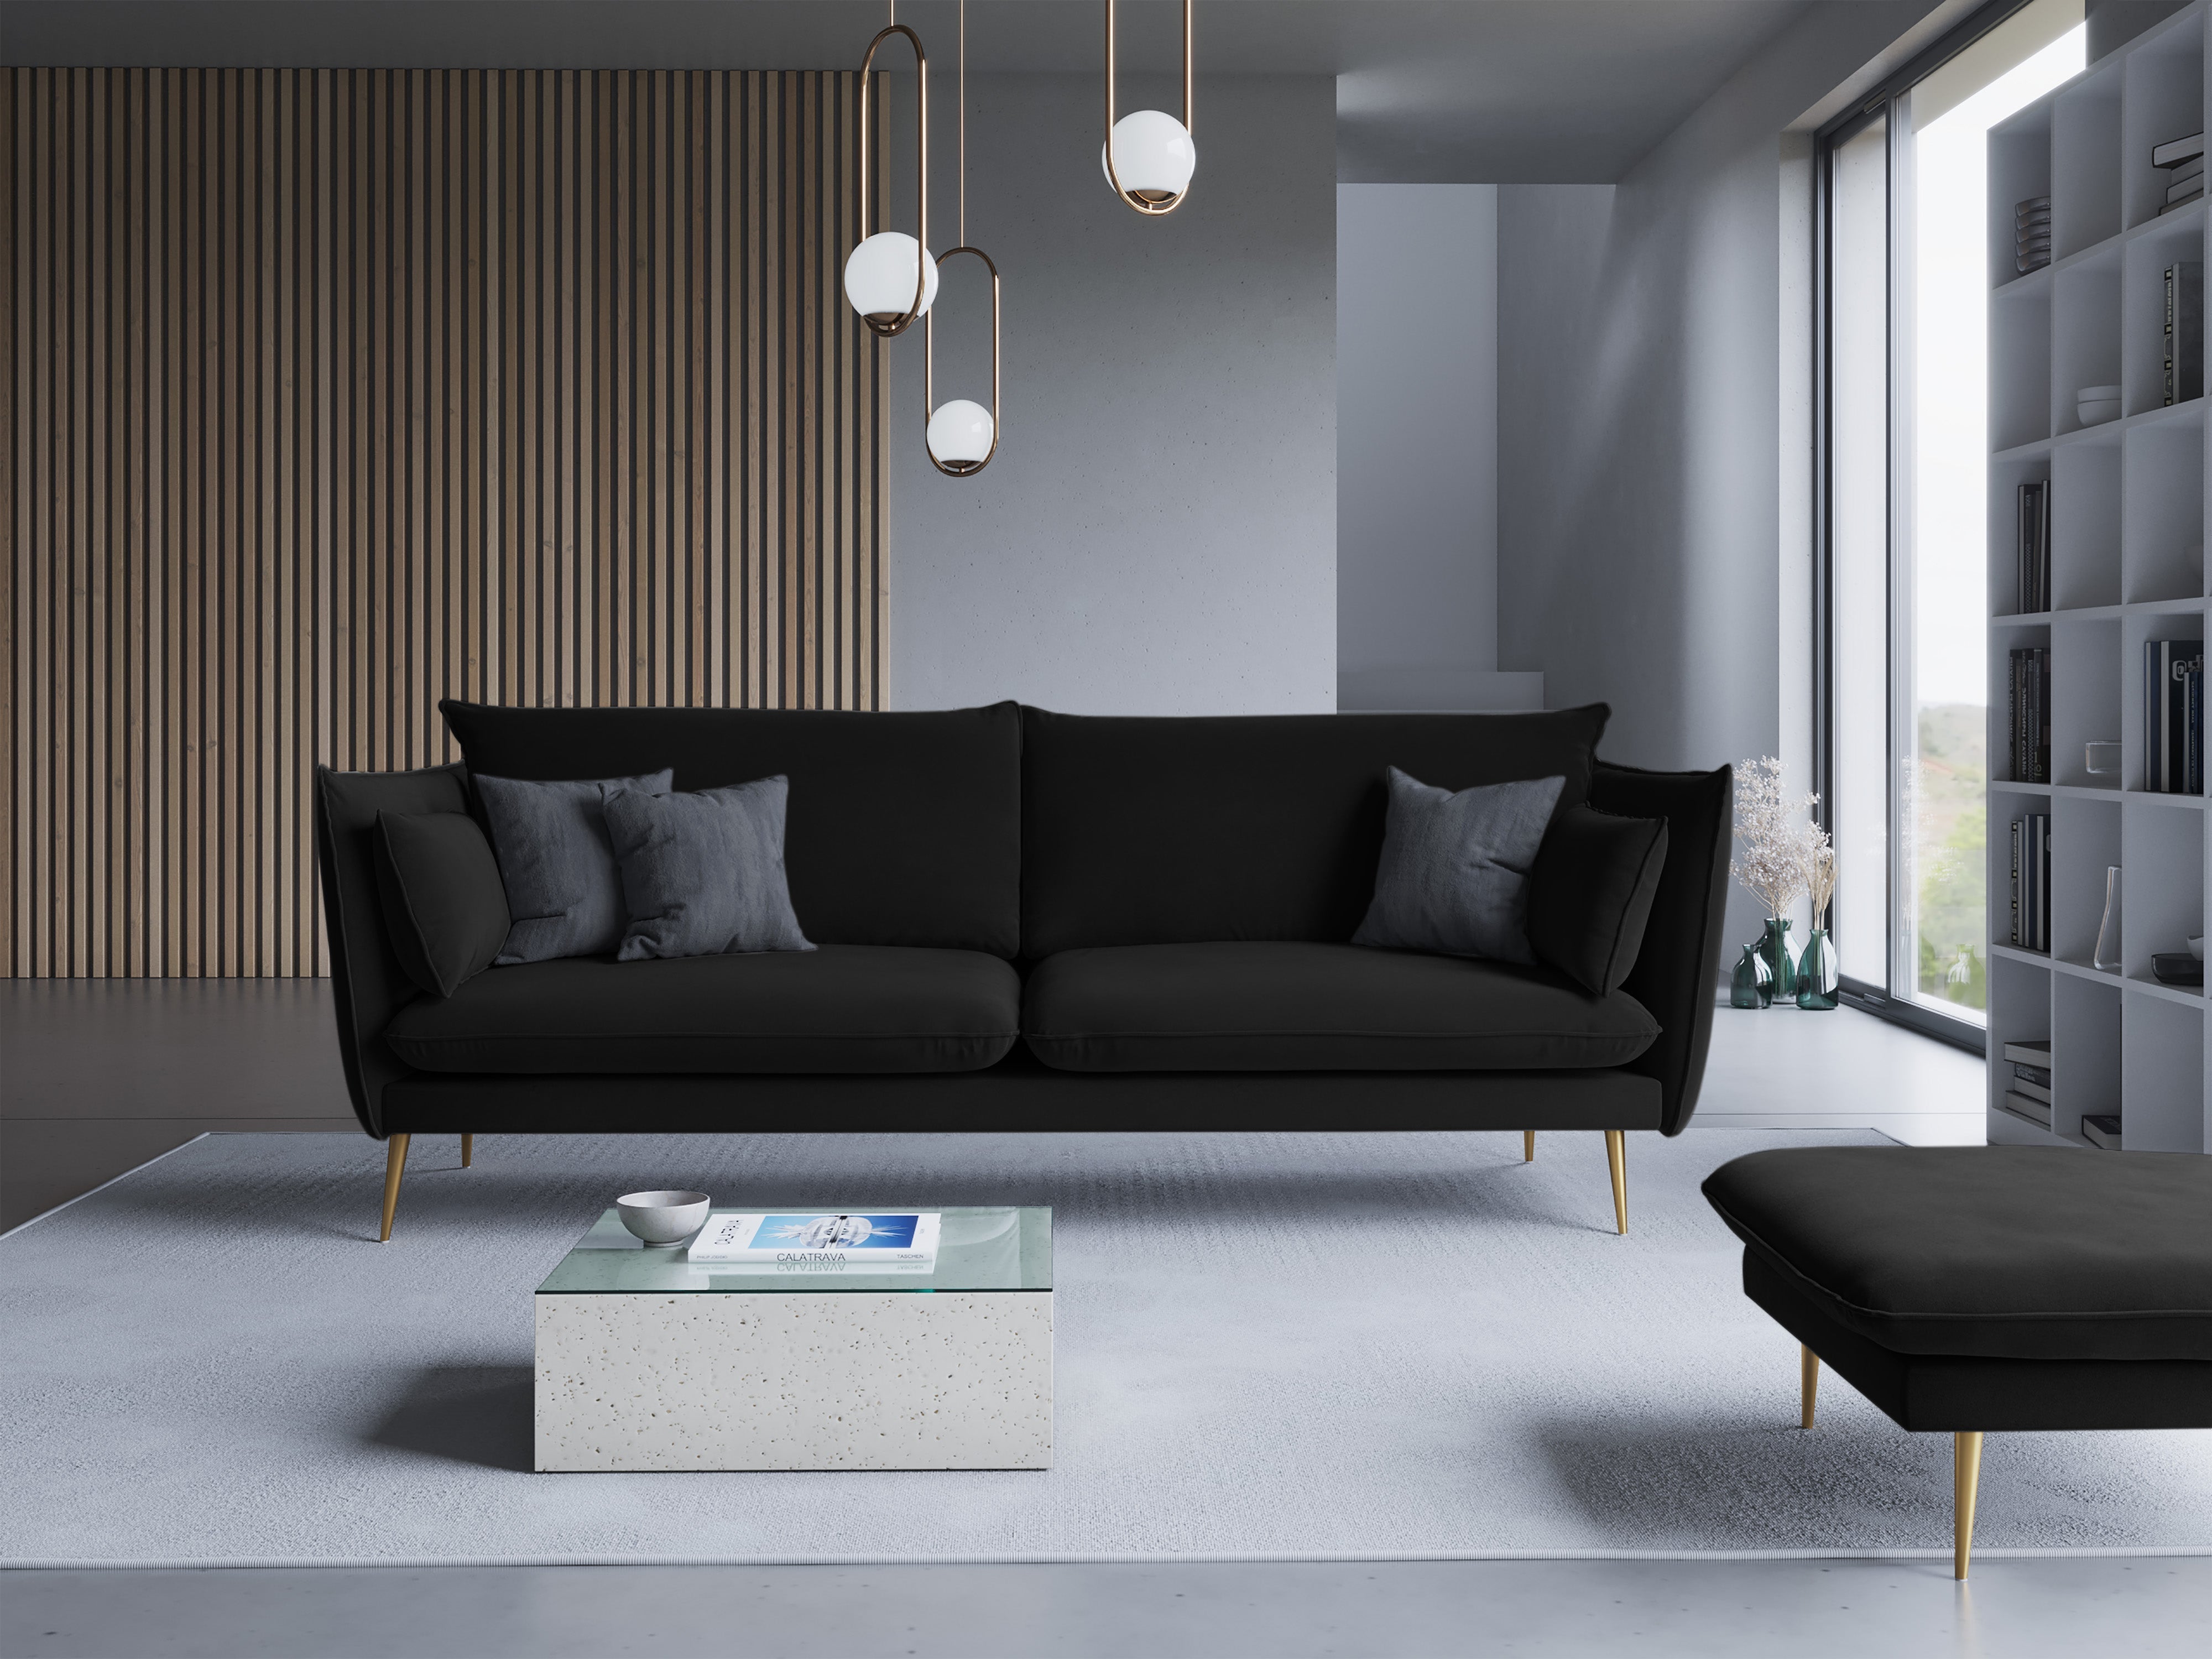 Sofa for the Scandinavian interior